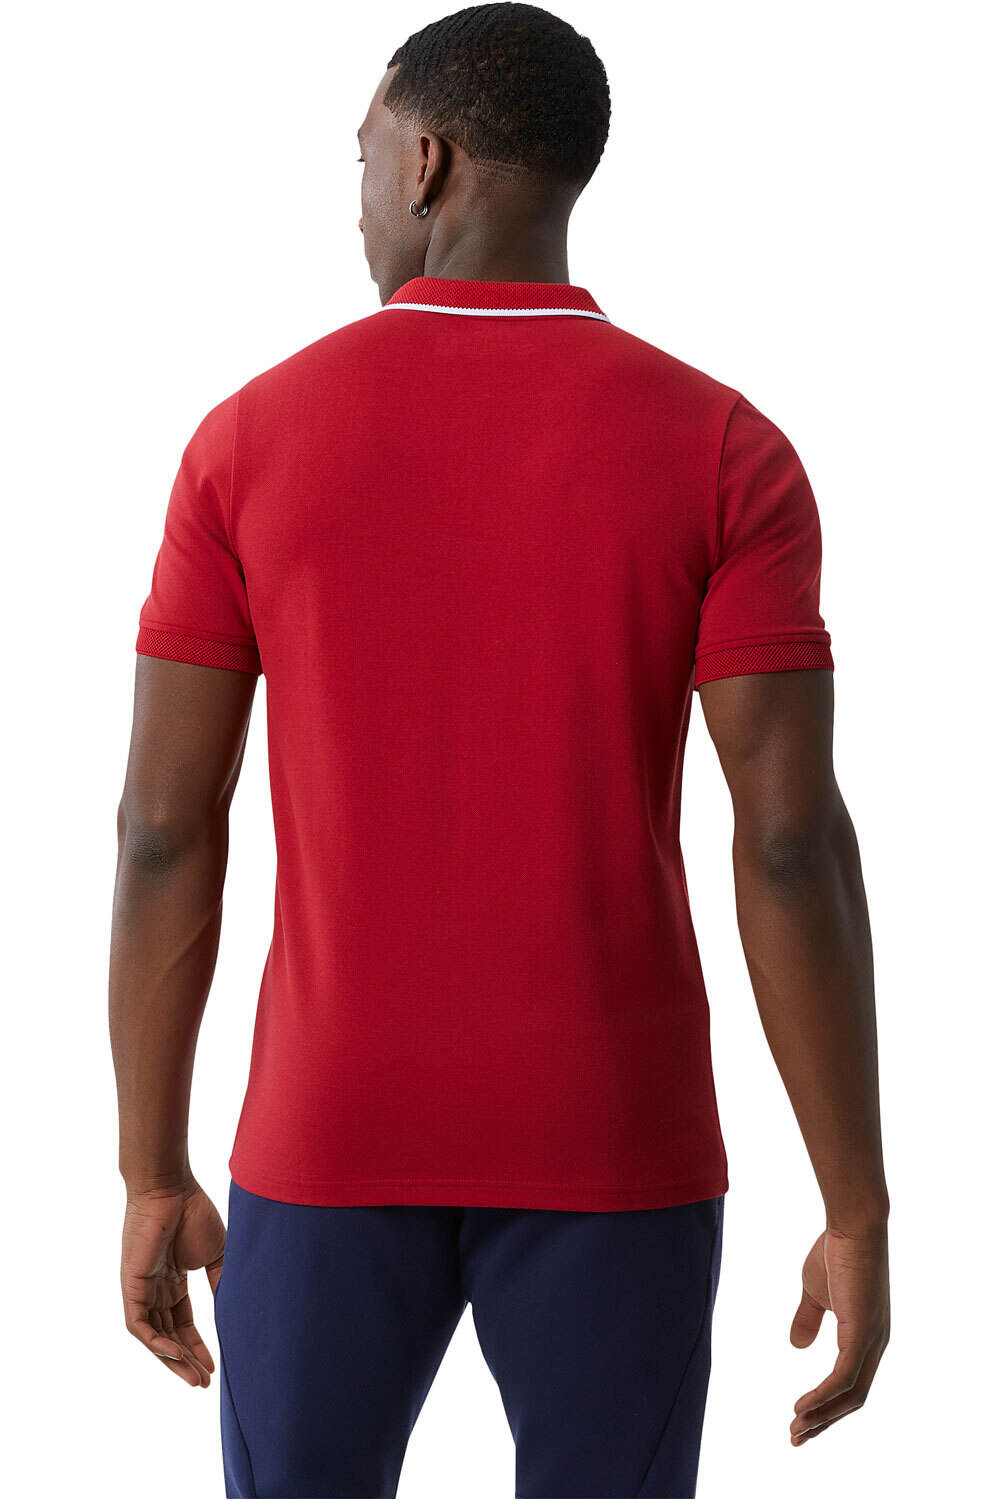 New Balance camiseta de fútbol oficiales ATHL.BILBAO 23 GYMSAC vista trasera